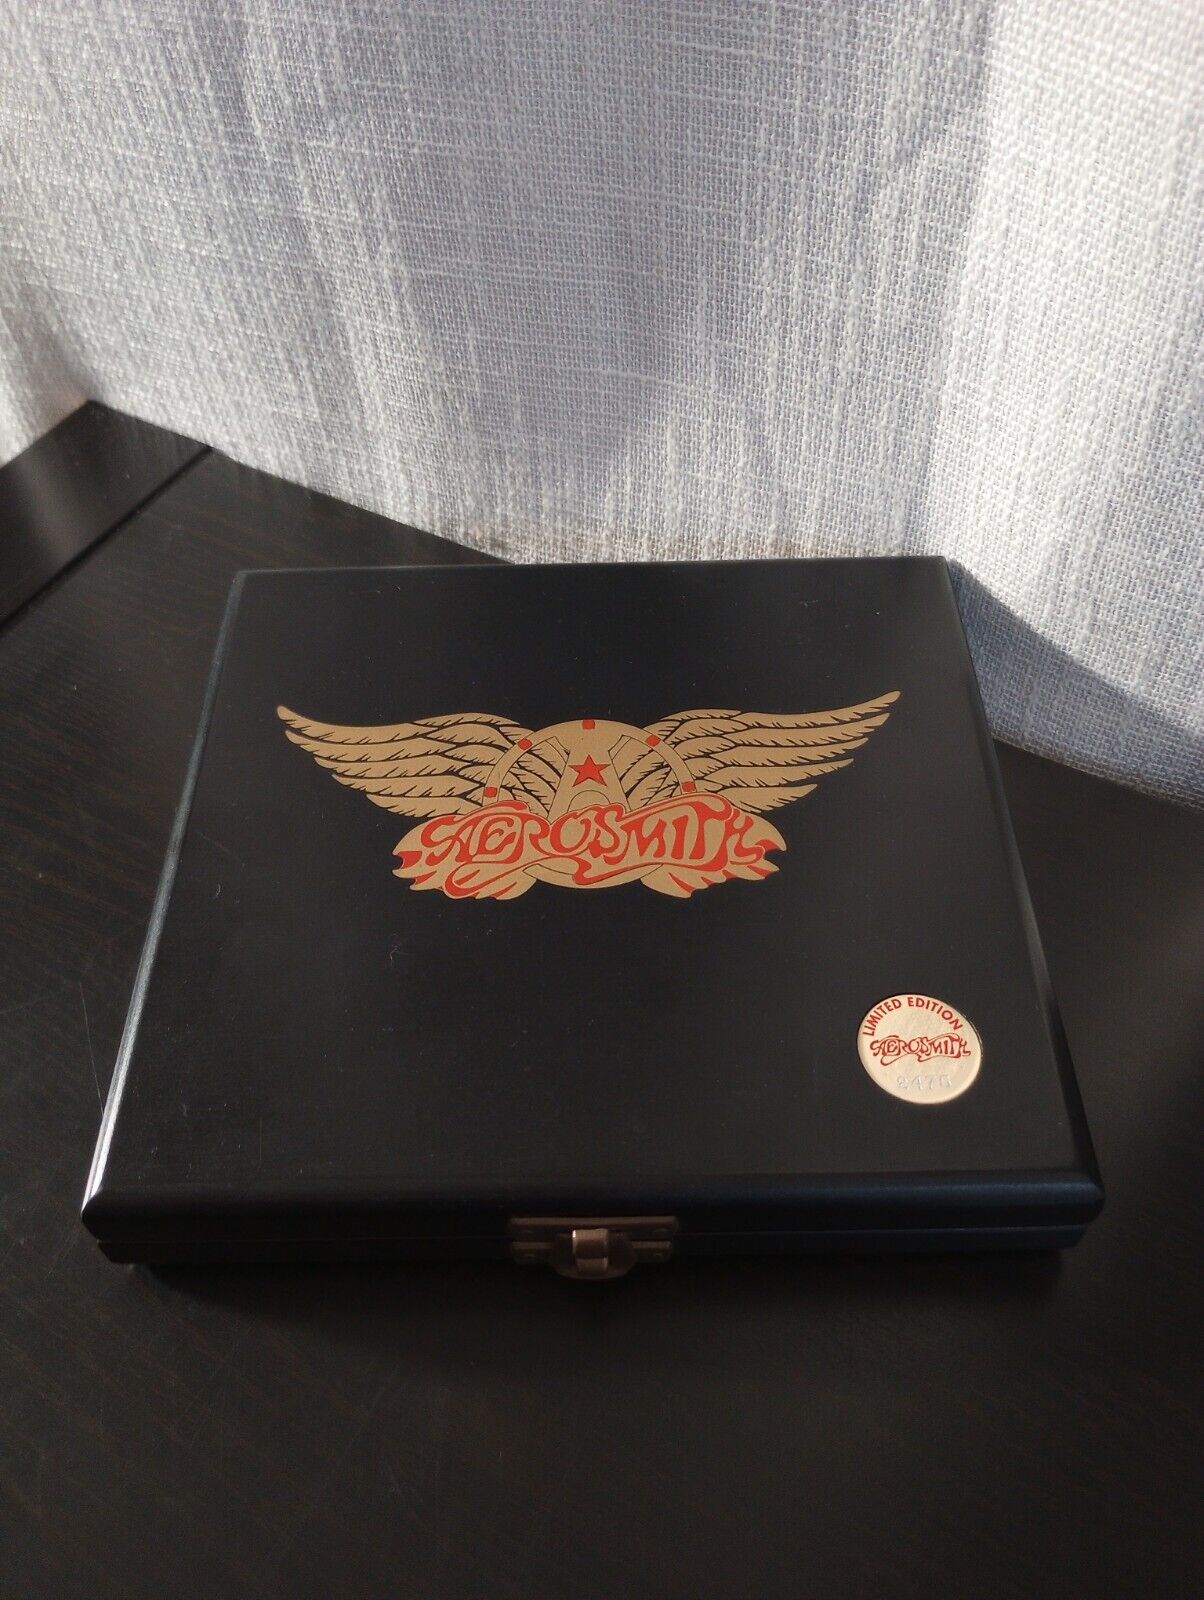 AEROSMITH Pandora's Toys Wooden Box 2-CD Set, Numbered Edition:  #2475 of 10,000